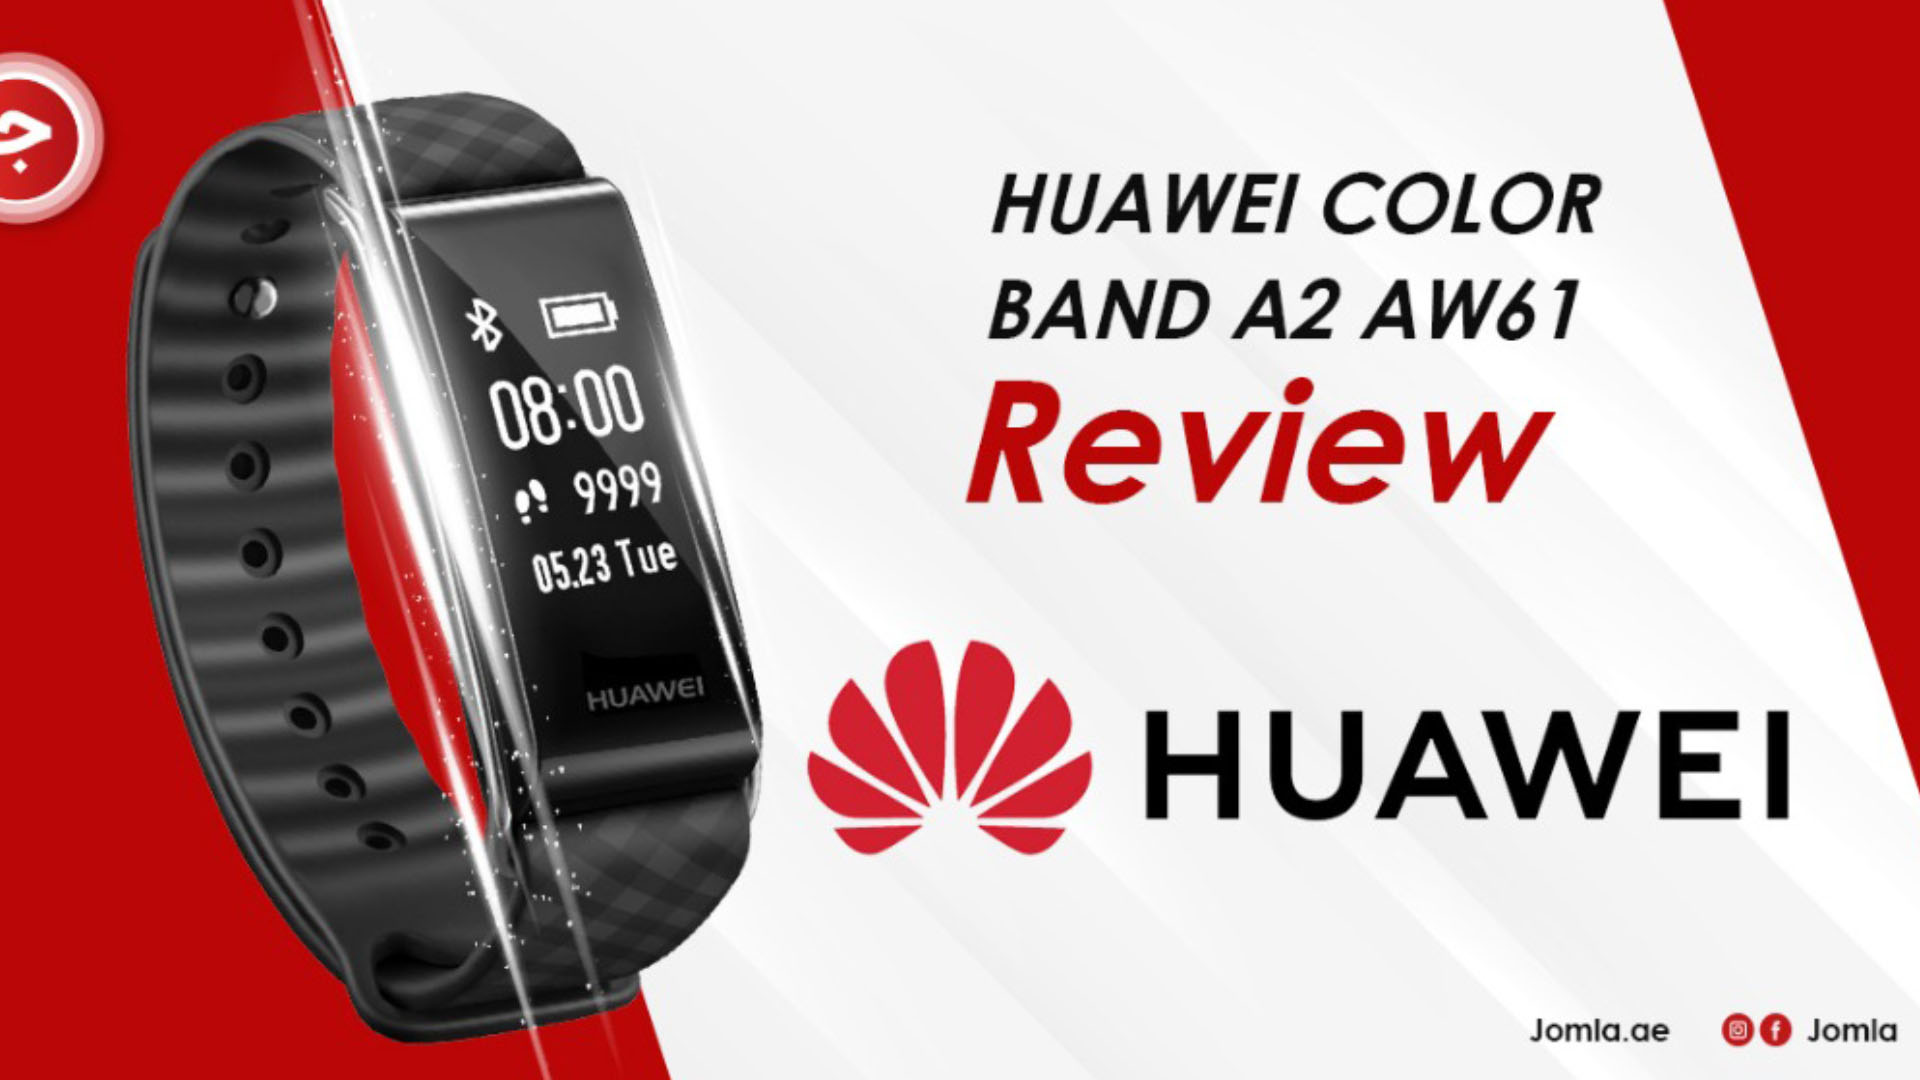 Huawei band 8 цены. Huawei Color Band a2. Хуавей бэнд 7 часы цвета. Huawei Band 8. Honor Color Band a2.